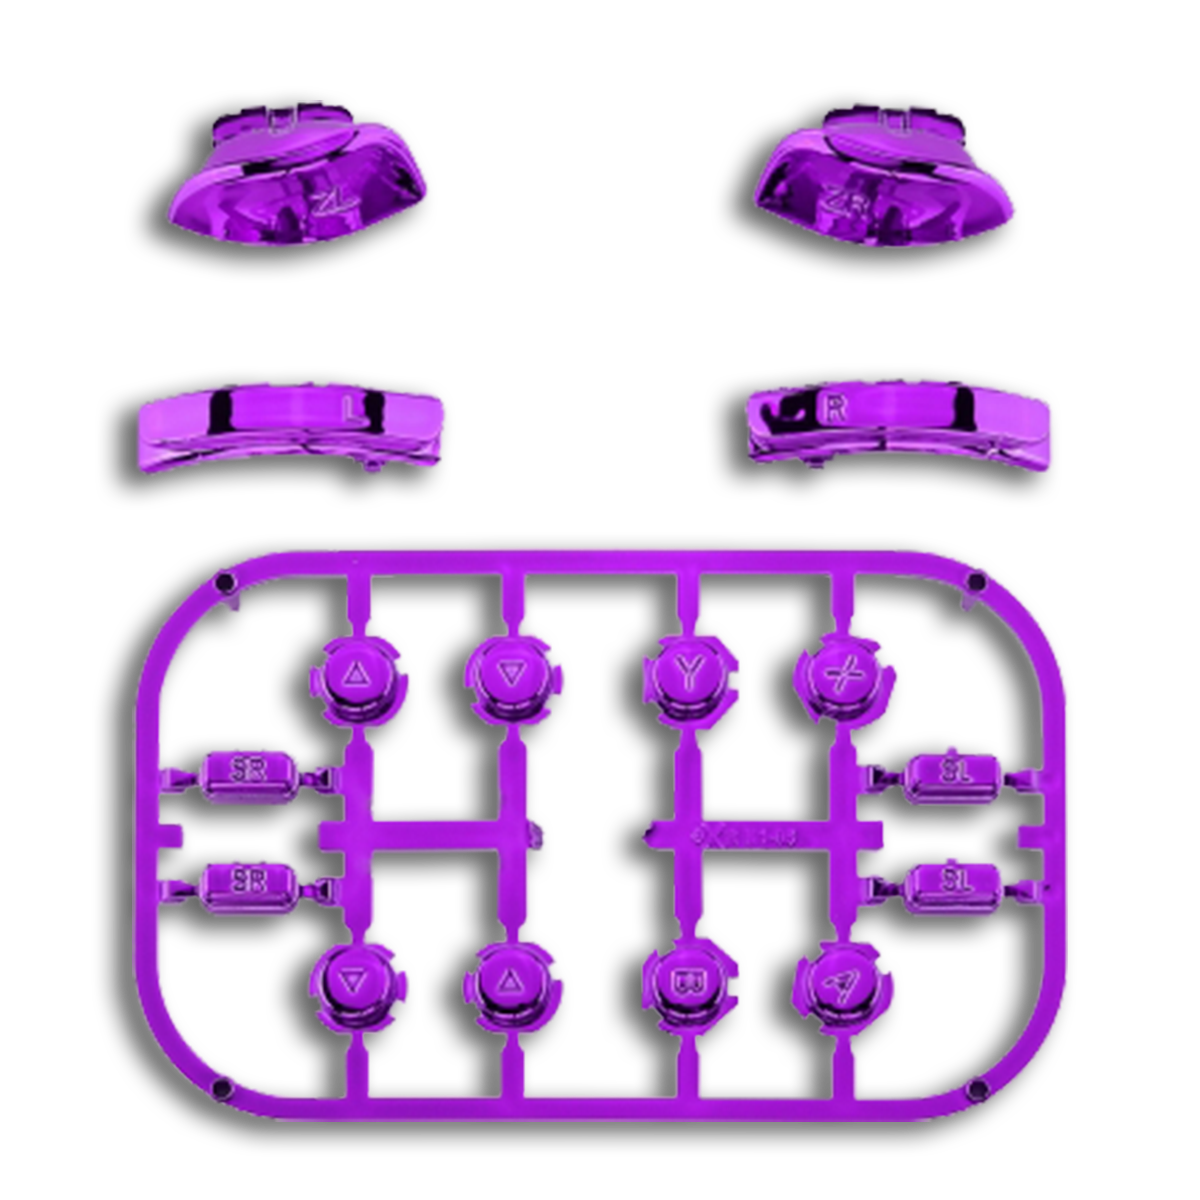 kit-gachettes-boutons-joycons-chrome-violet-custom-manette-switch-personnalisee-draw-my-pad